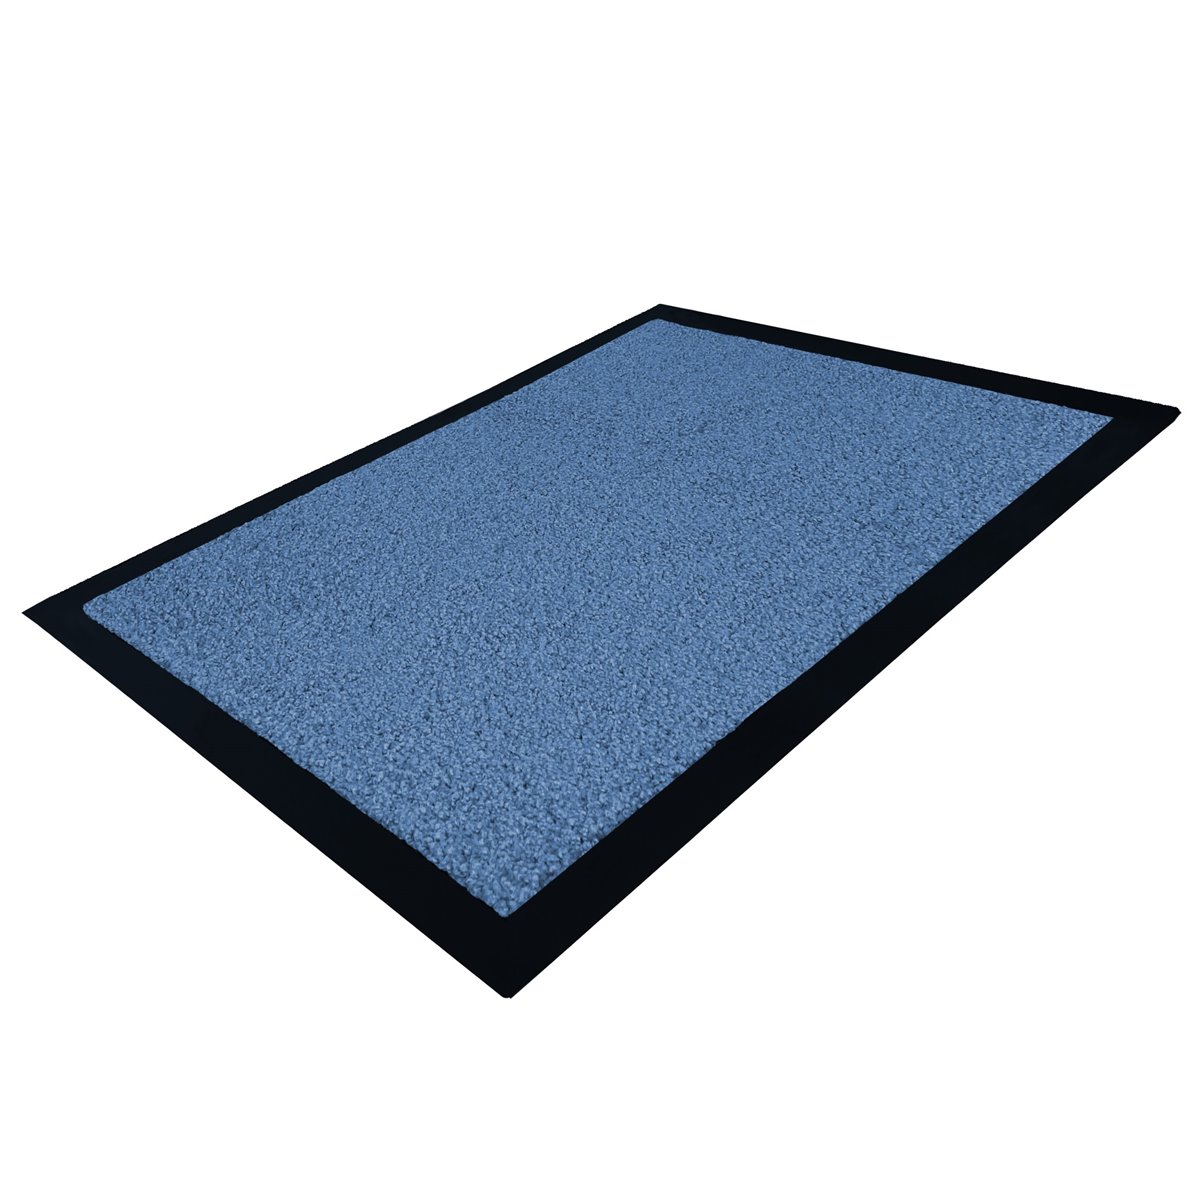 Acomoda Textil - Felpudo de Entrada Super Absorbente Rectangular para  Interior y Exterior. Felpudo Antideslizante de Fácil Limpieza. (60x90 cm)